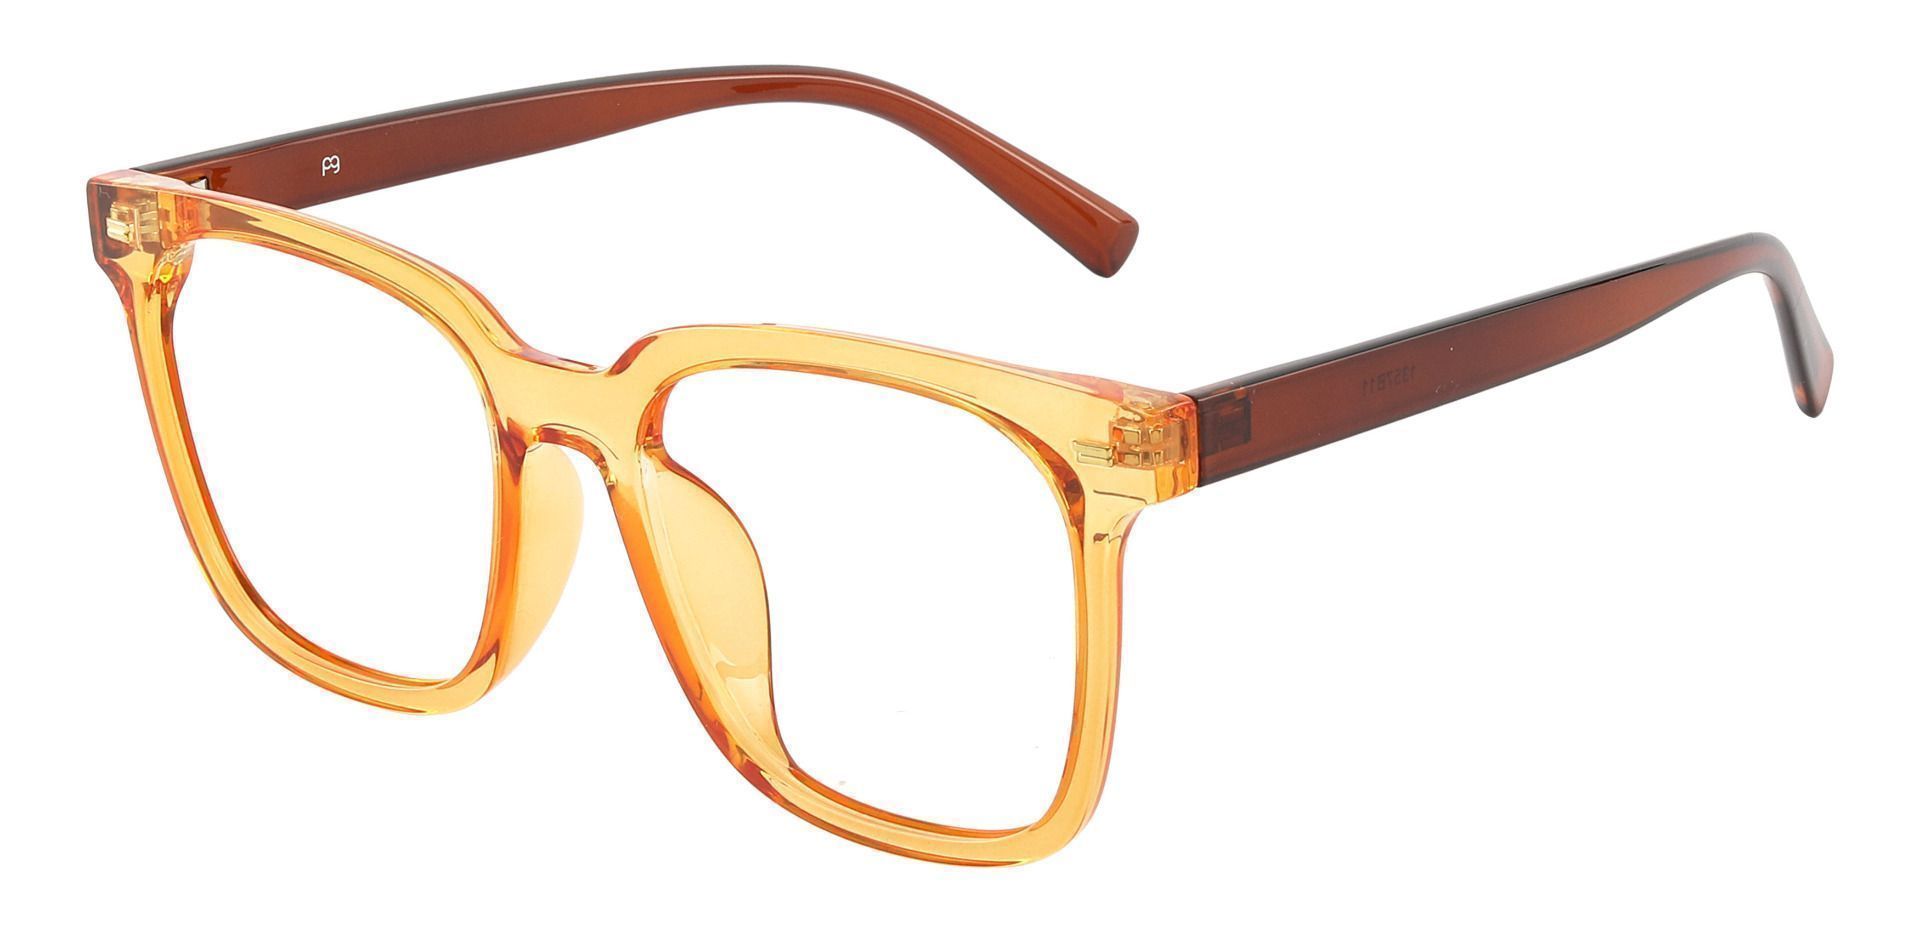 Charlie Oversized Eyeglasses Frame - Orange